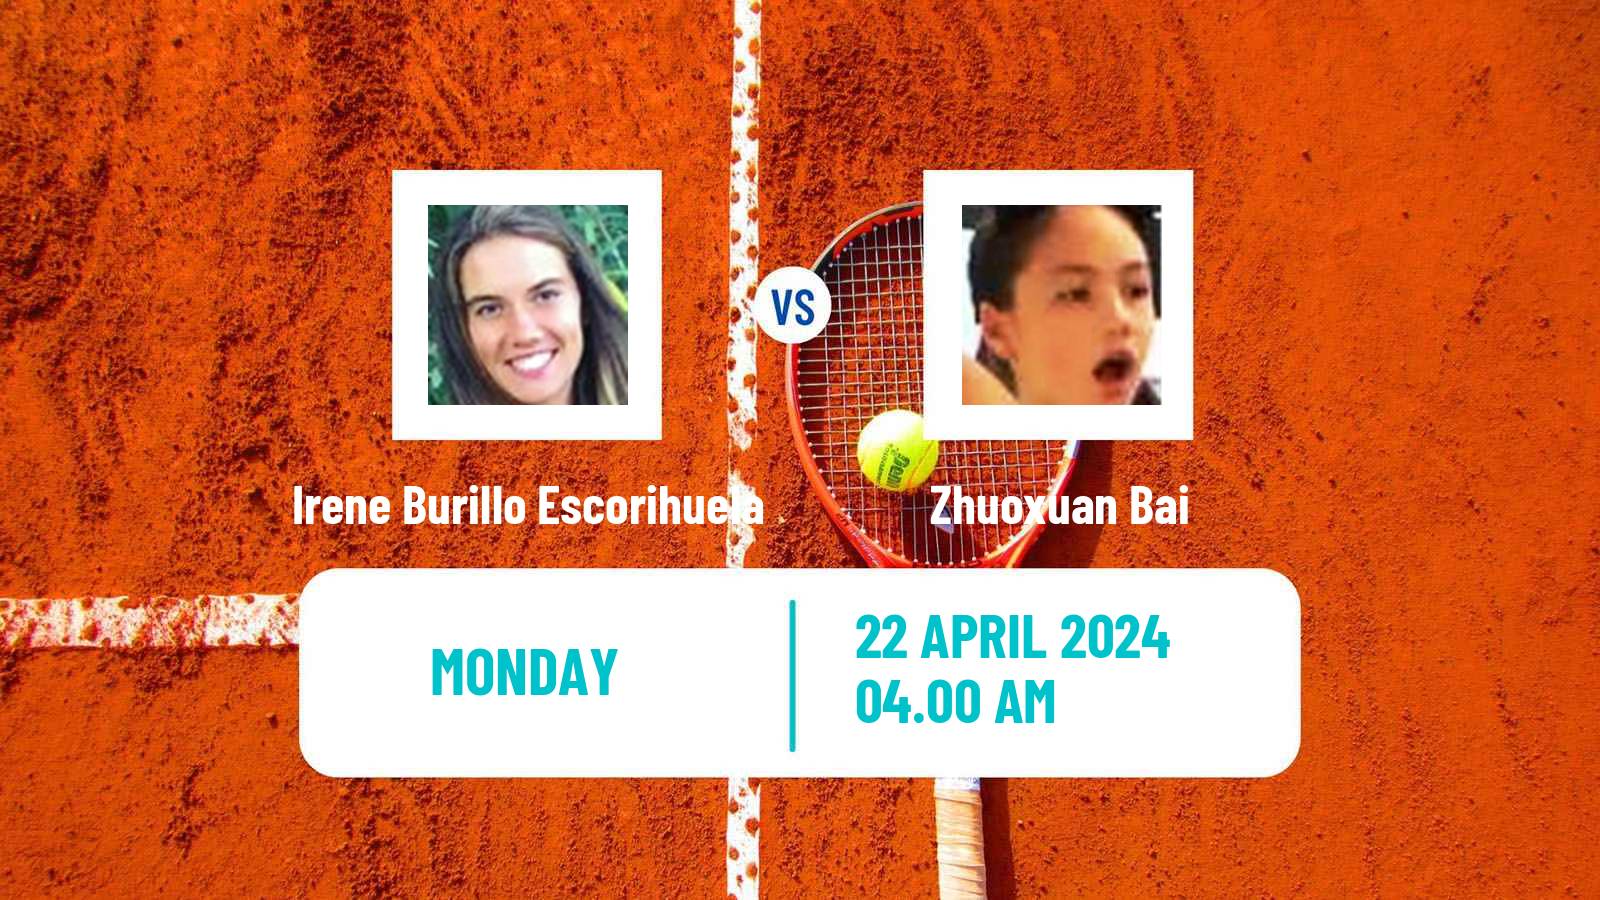 Tennis WTA Madrid Irene Burillo Escorihuela - Zhuoxuan Bai